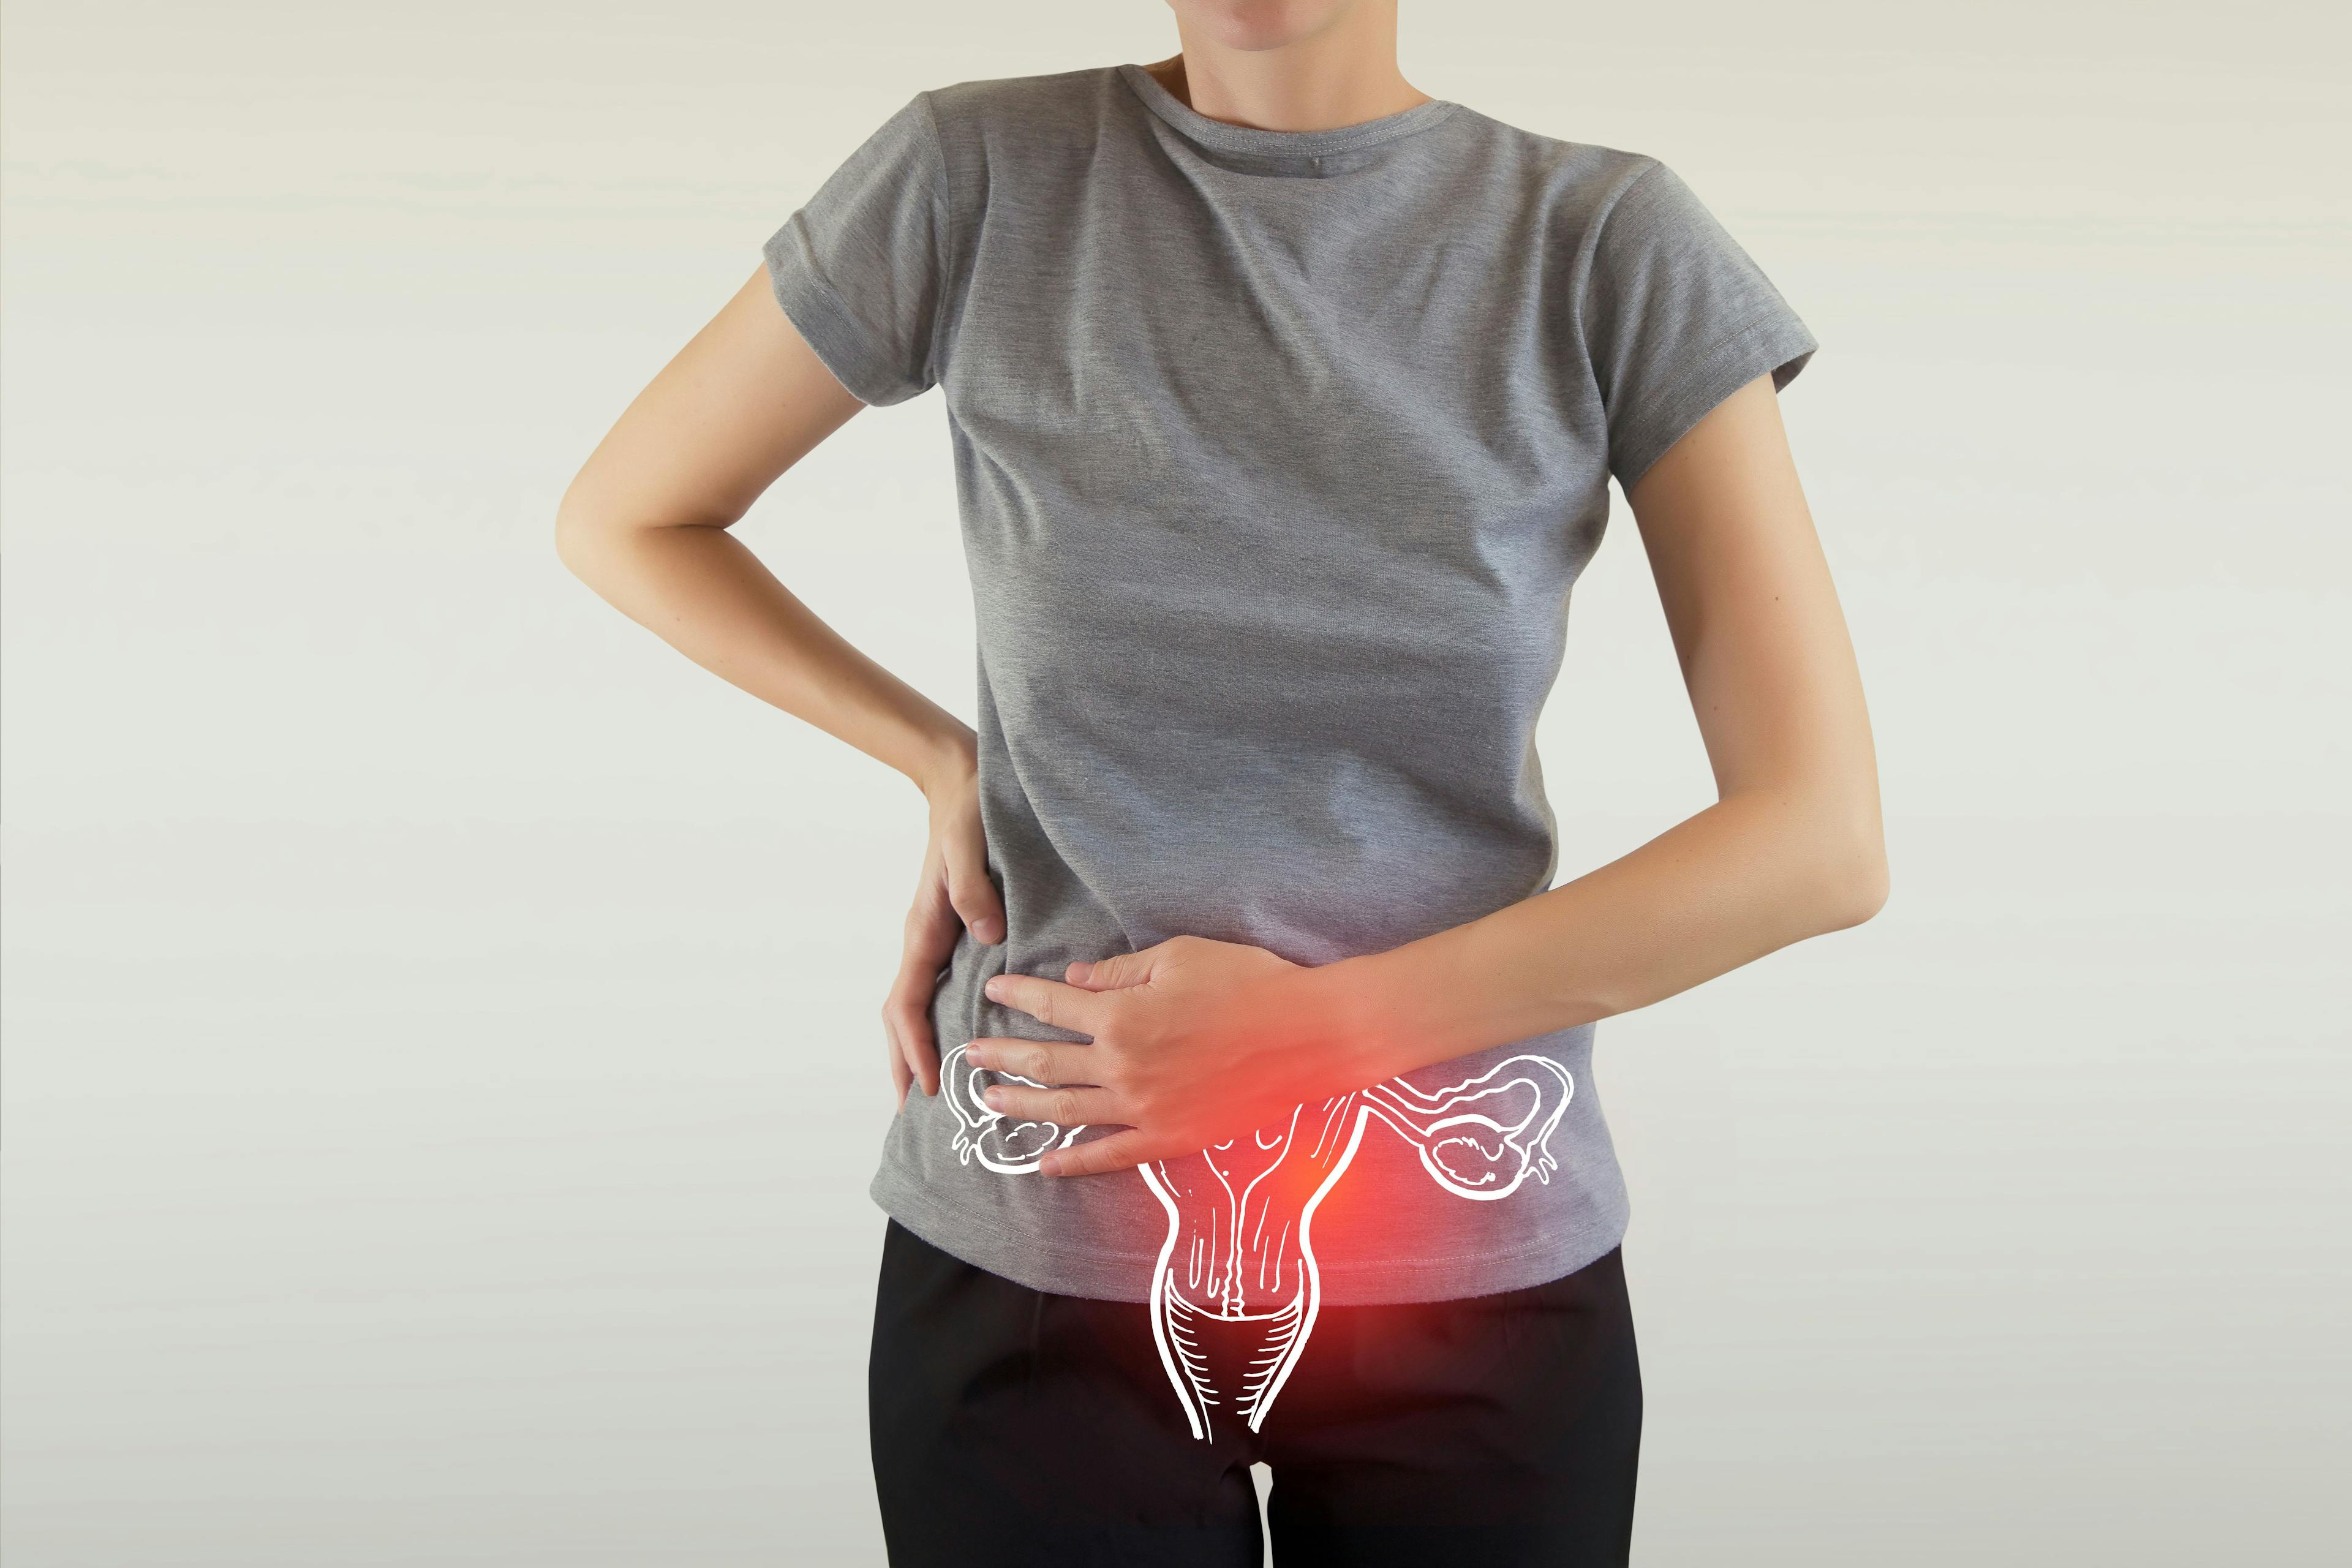 Female Reproductive System Anatomy | Image Credit: mi_viri - stock.adobe.com